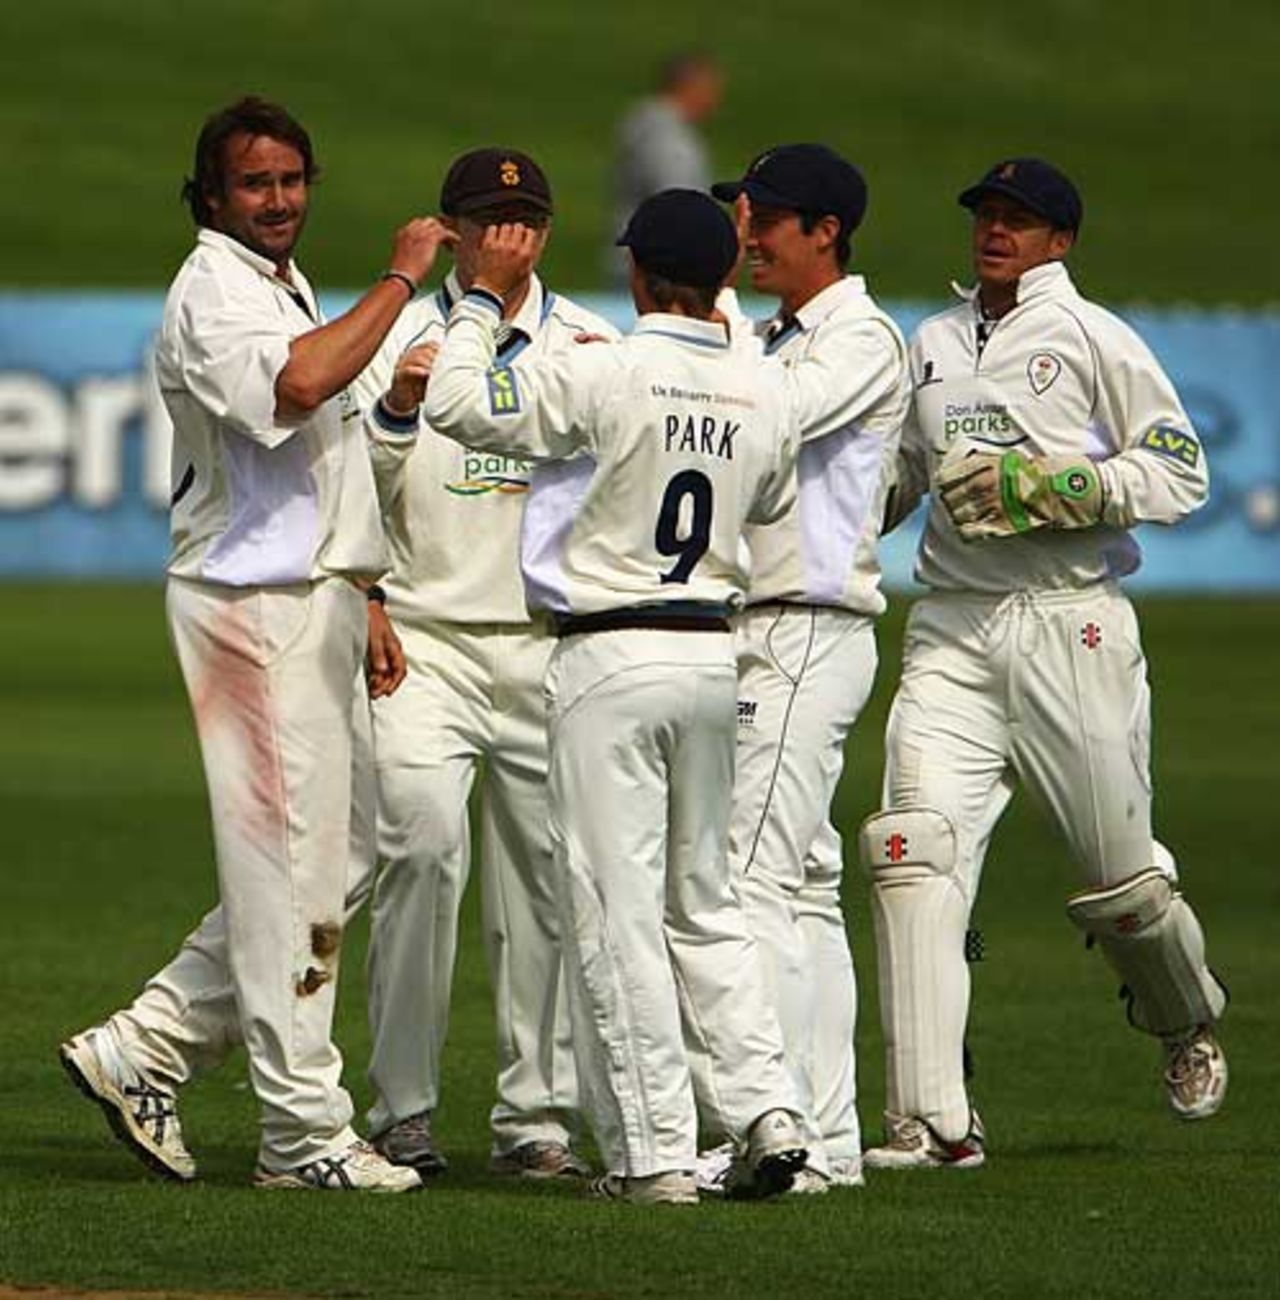 Steffan Jones took five wickets to help bowl out Kent, Derbyshire v Kent, Derby, September 2, 2009